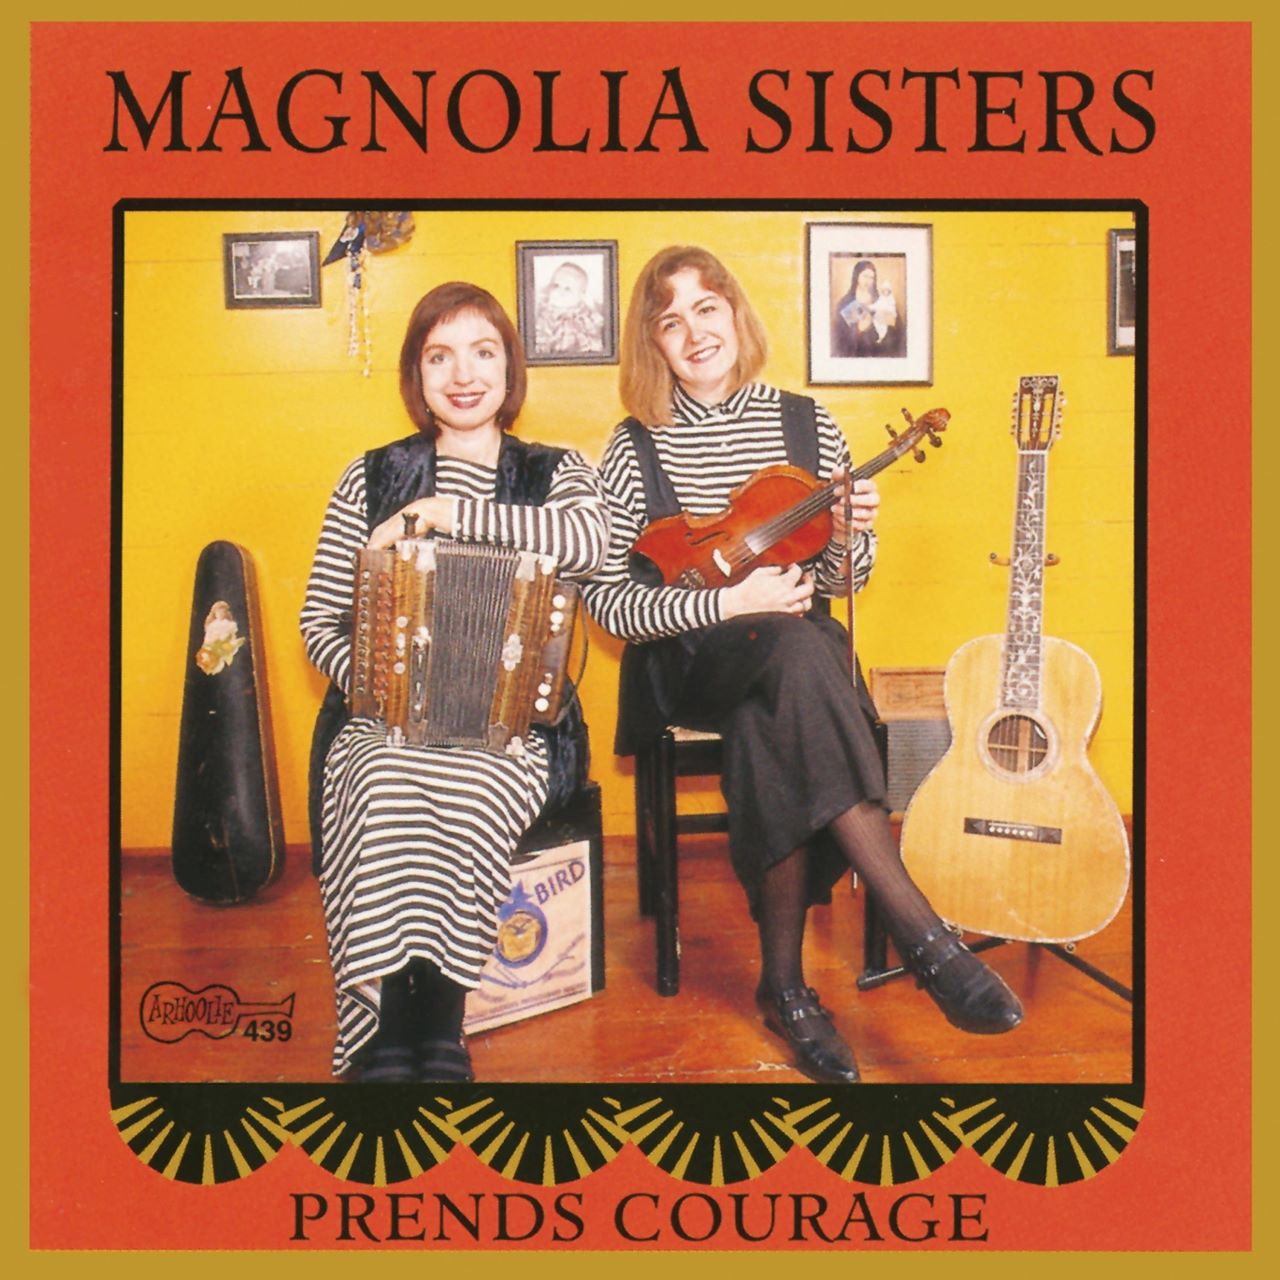 Magnolia Sisters - Prends Courage cover album